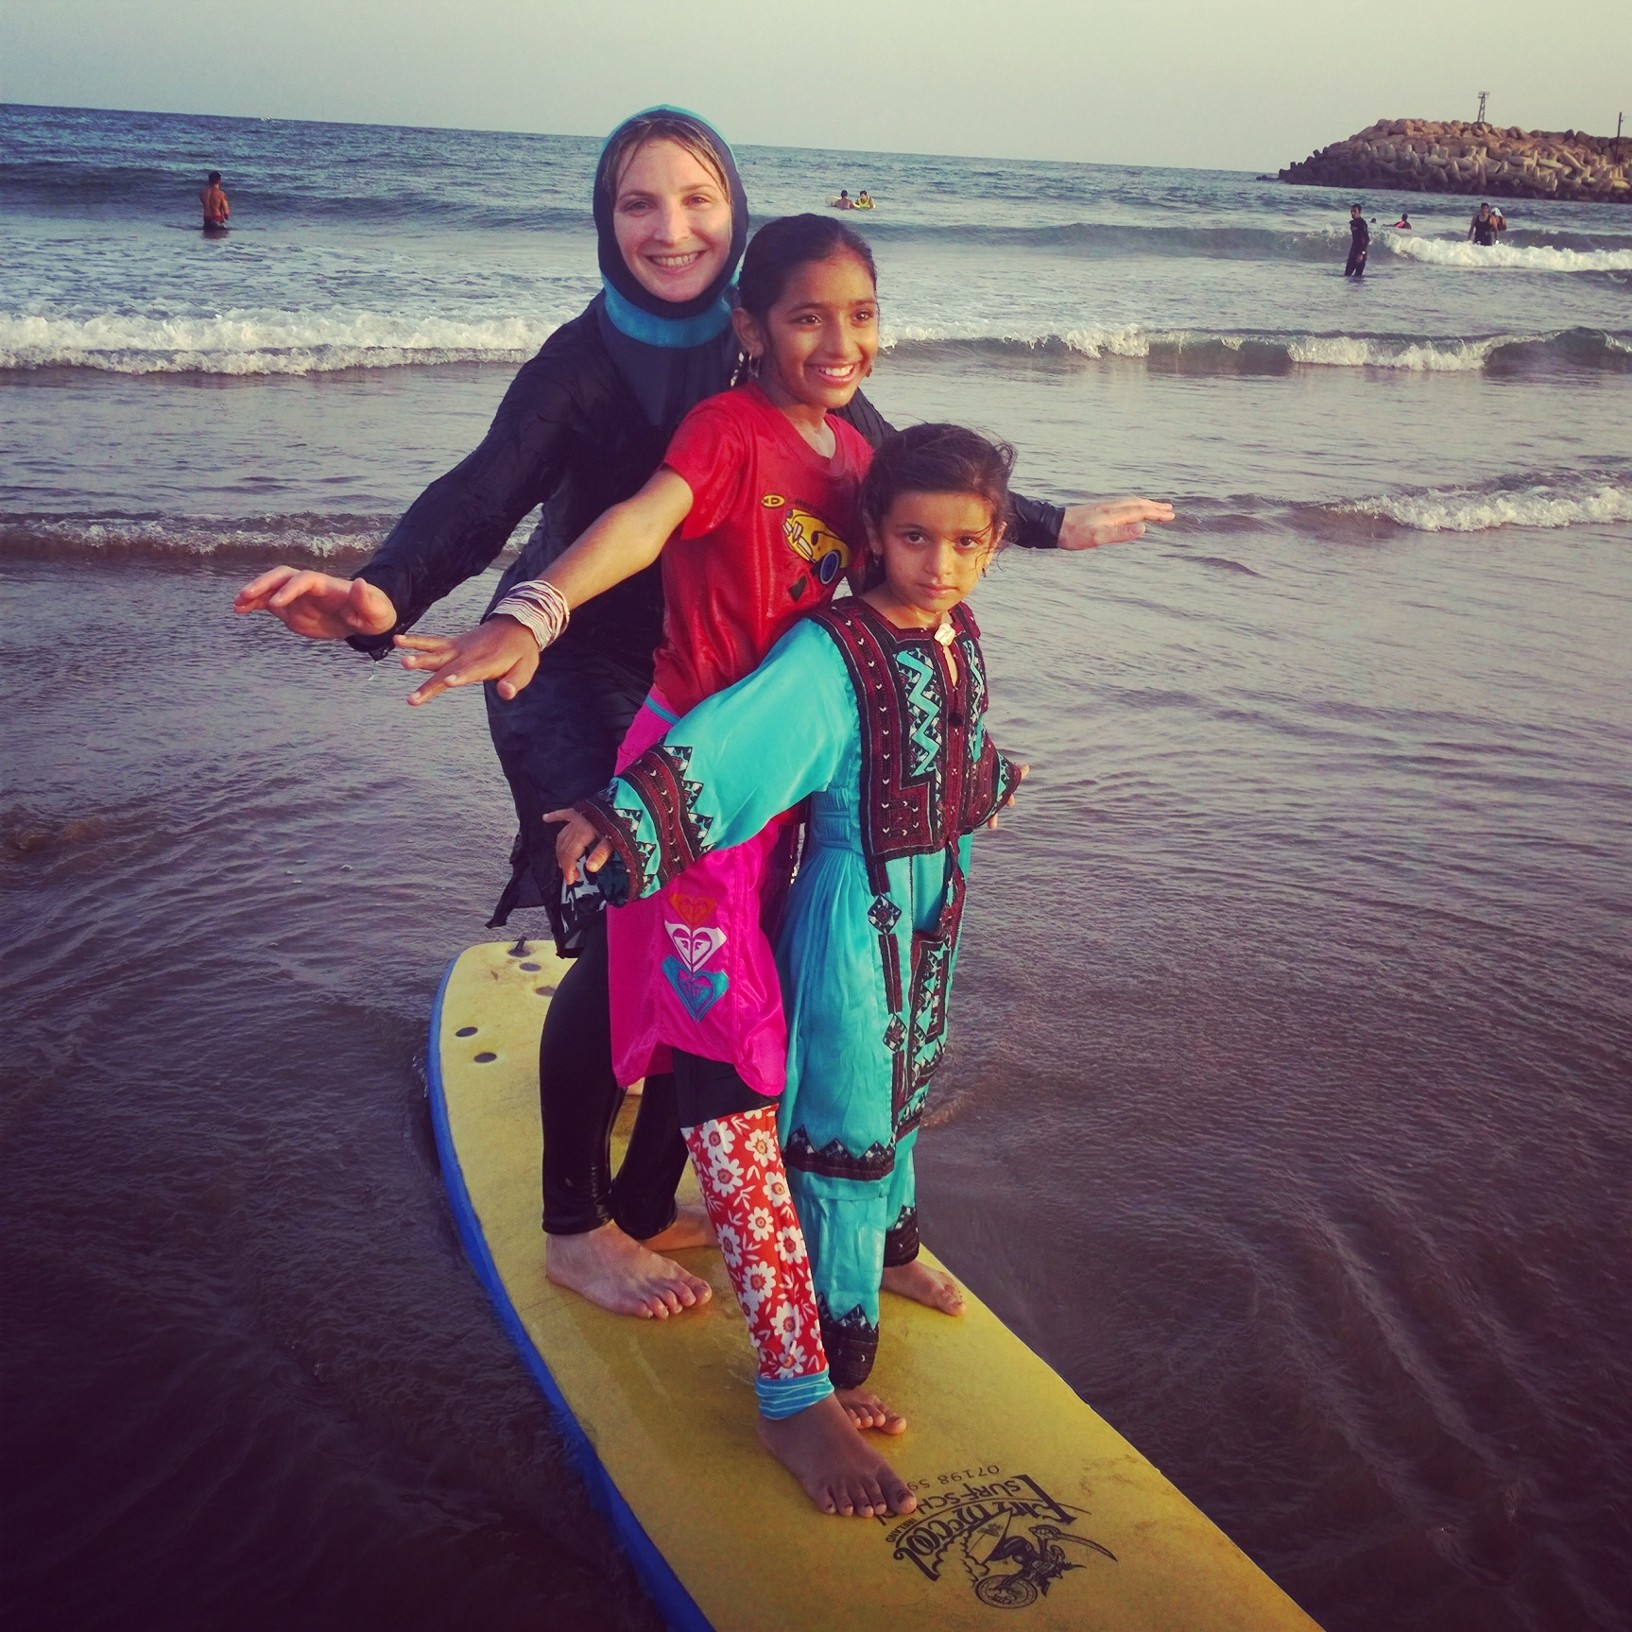 Organic Board Wax: Gifts for Surfer Girls